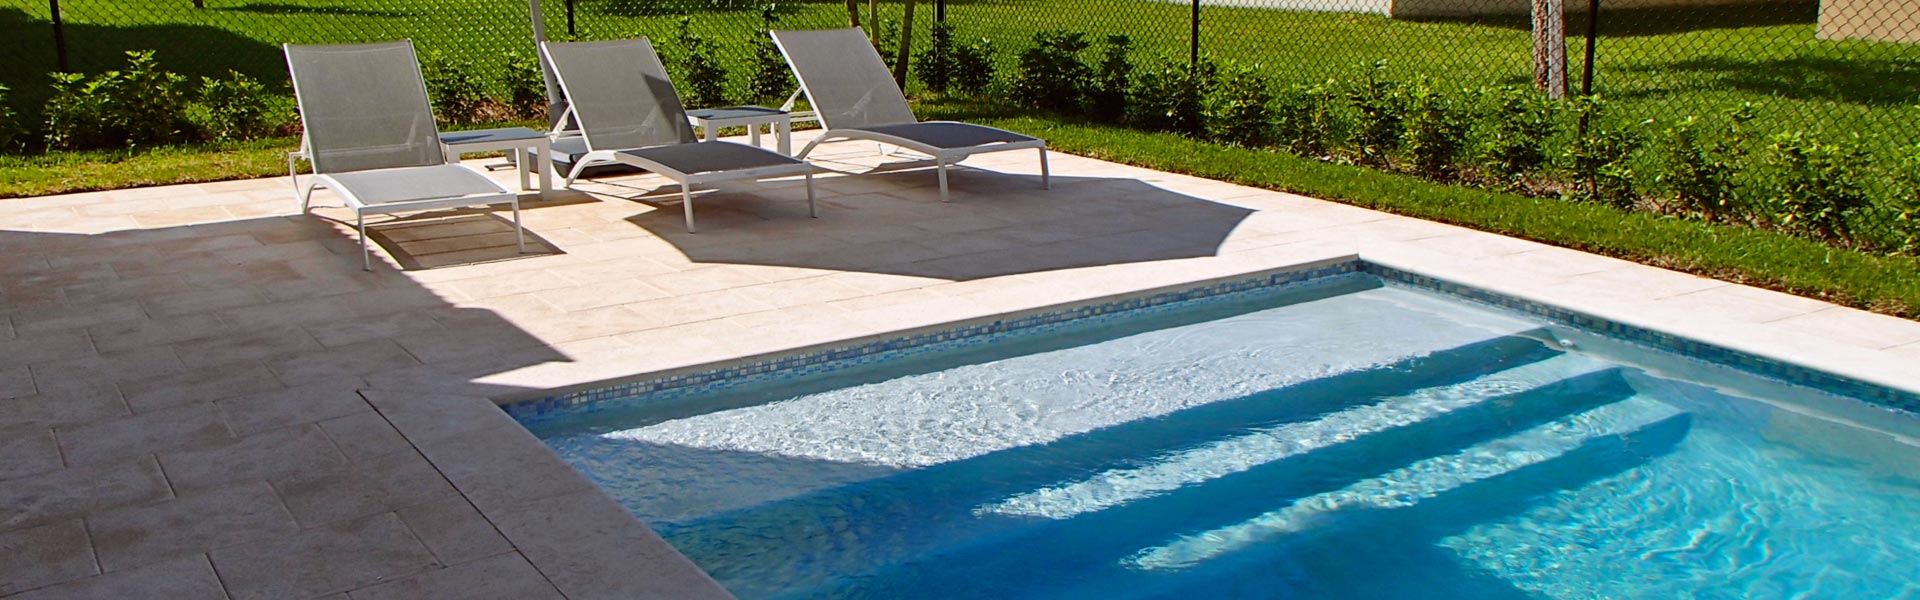 pool design miami